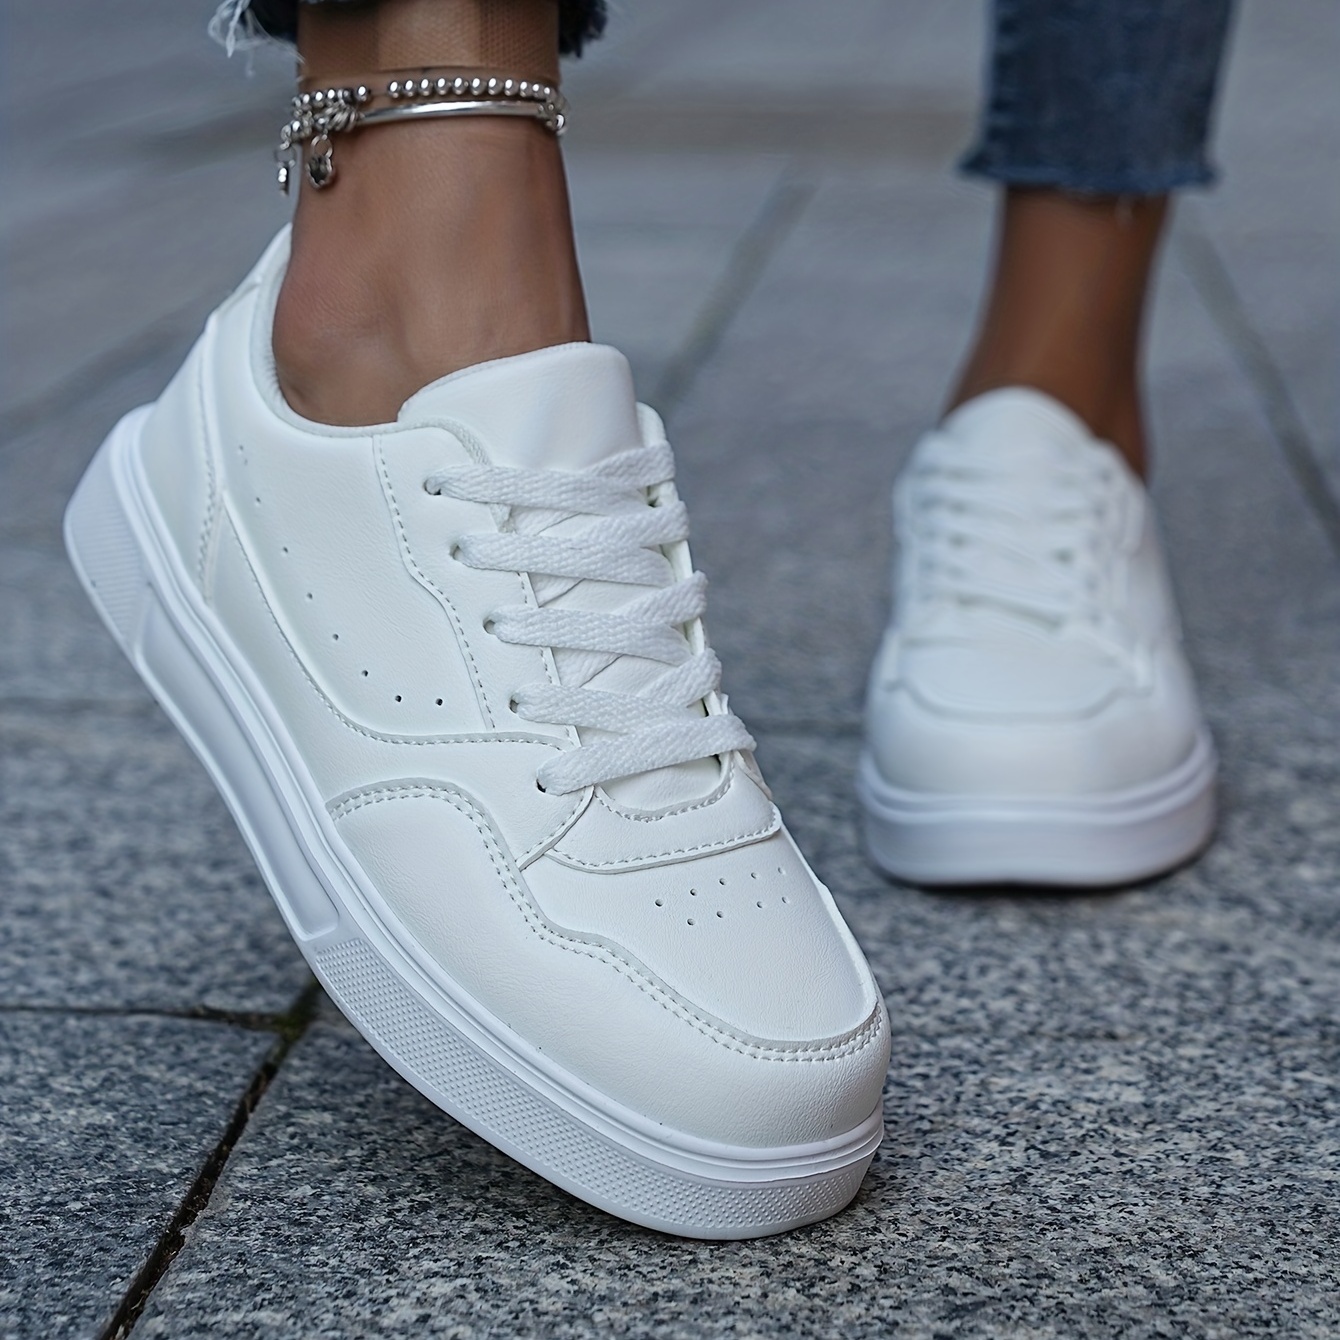 White Skate Shoes.